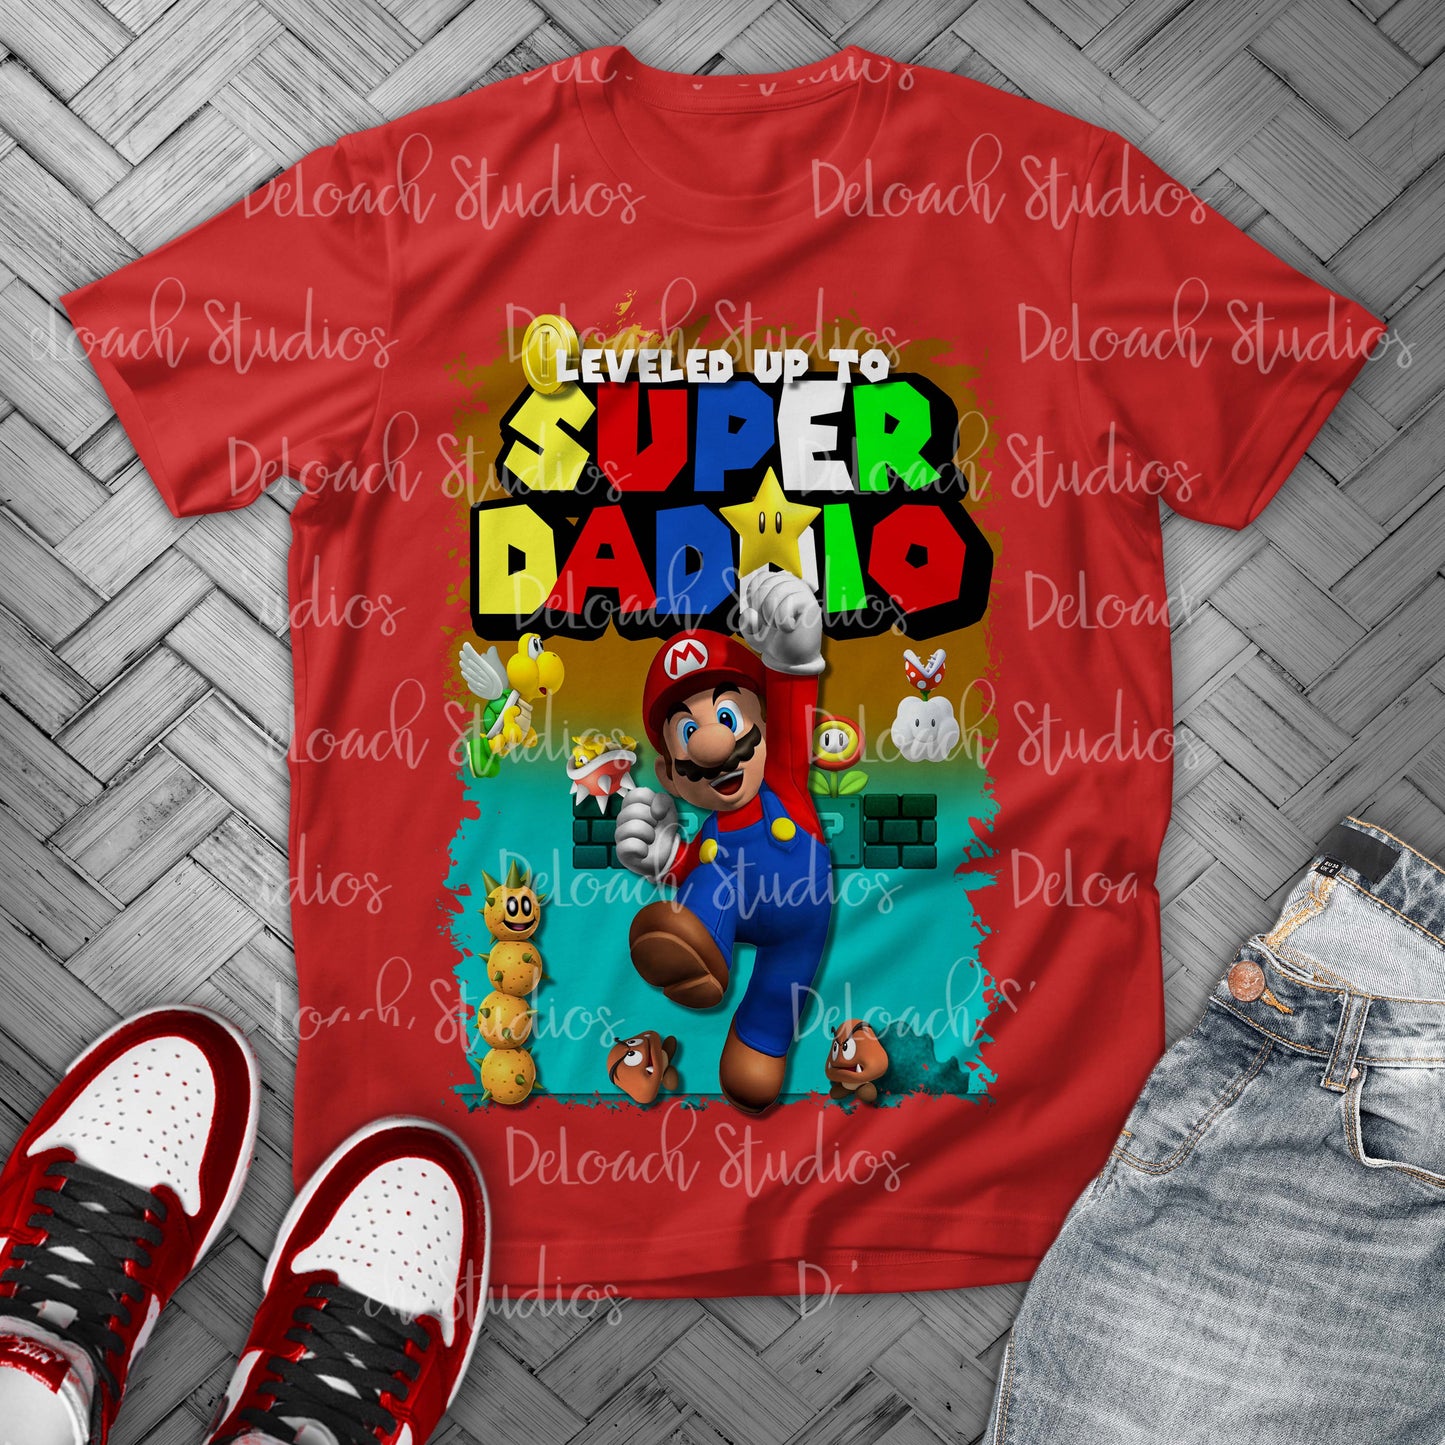 Super Daddio (colors)